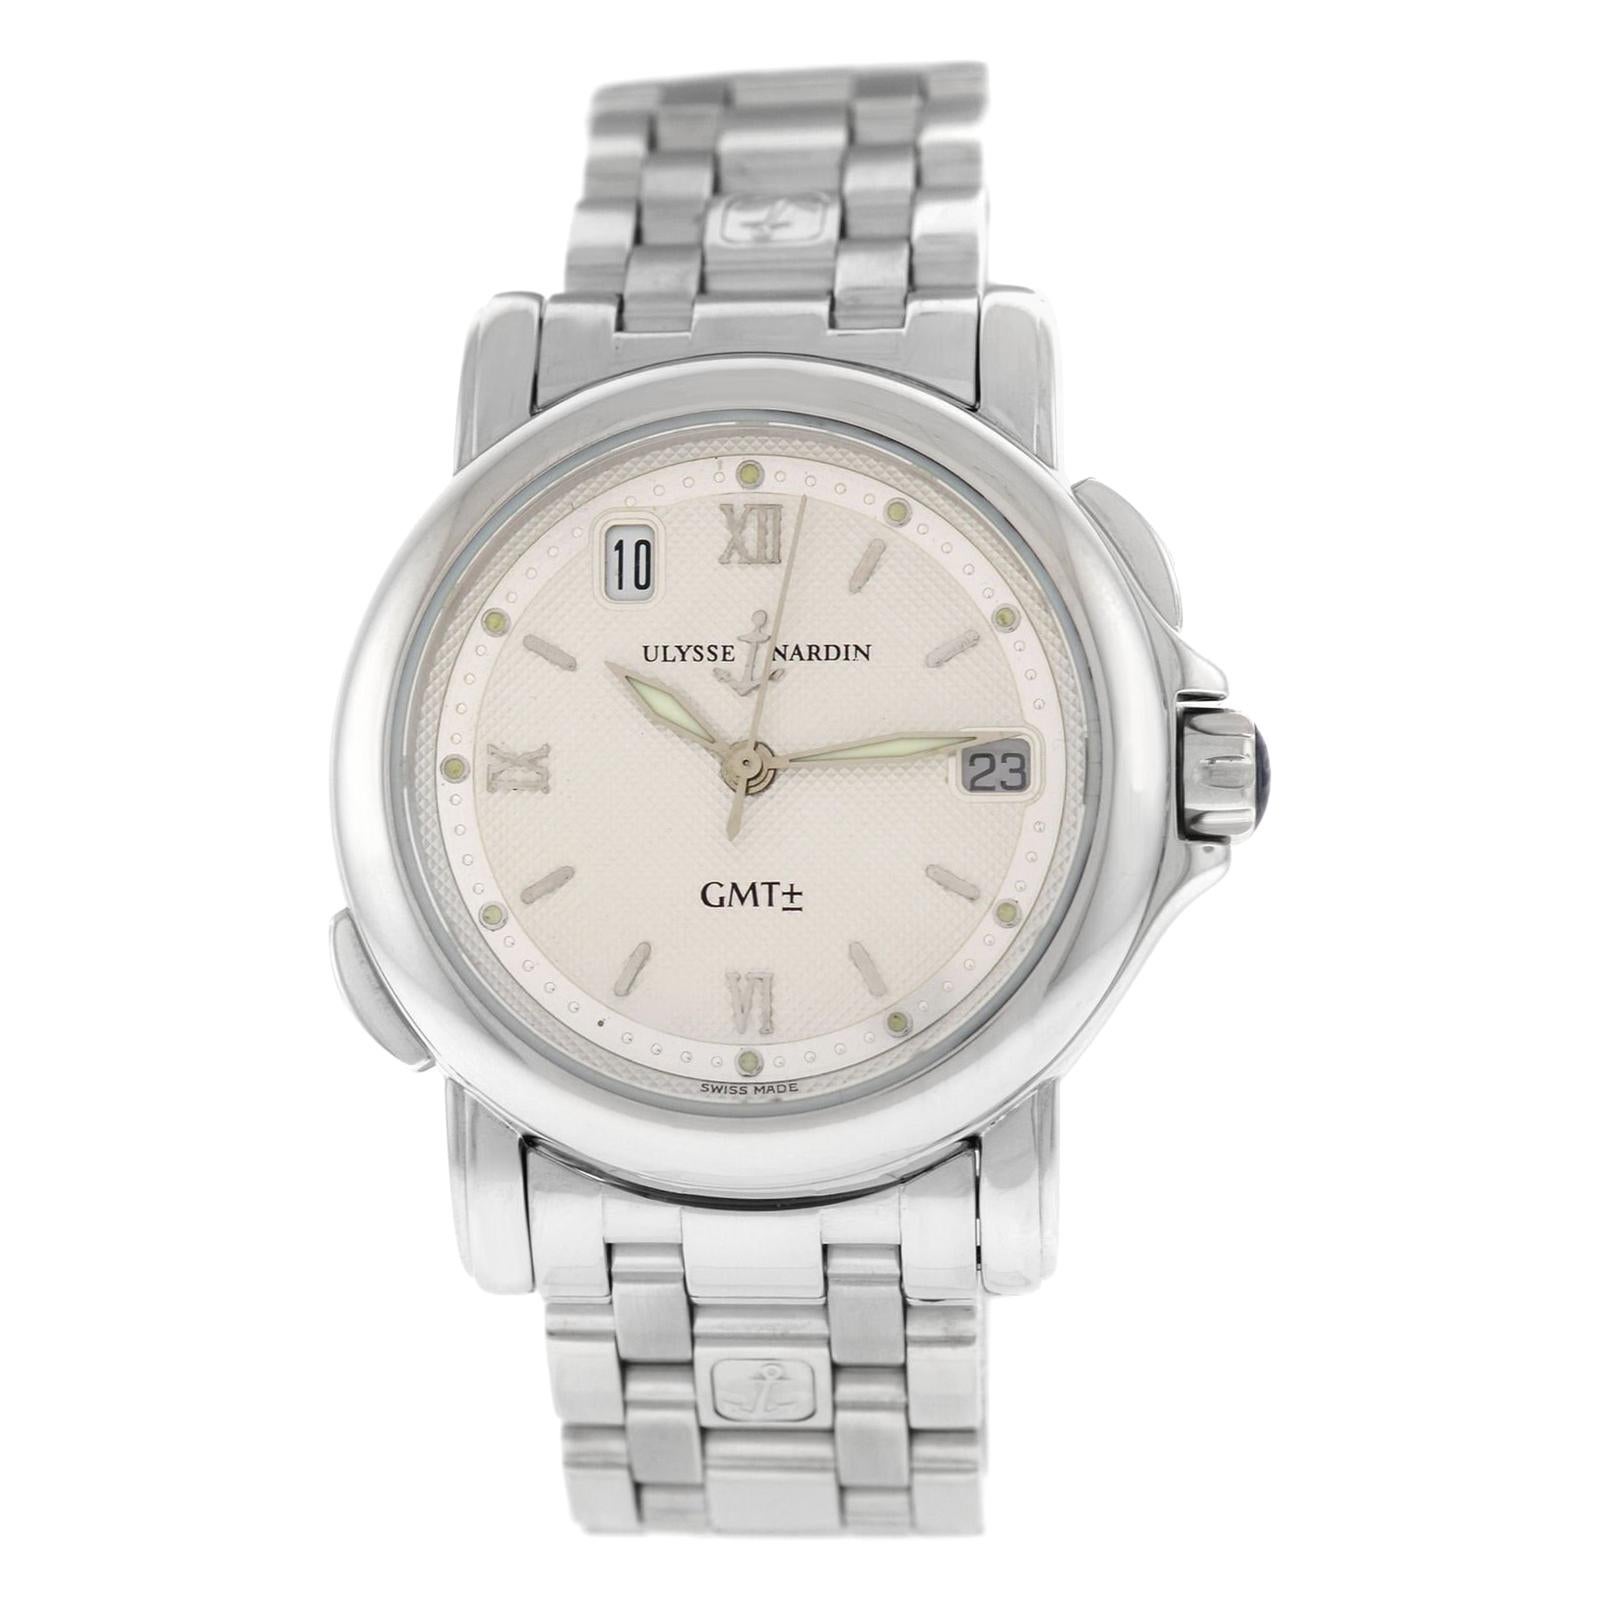  Men's Ulysse Nardin San Marco 203-22 GMT +/- Automatic Date Watch For Sale